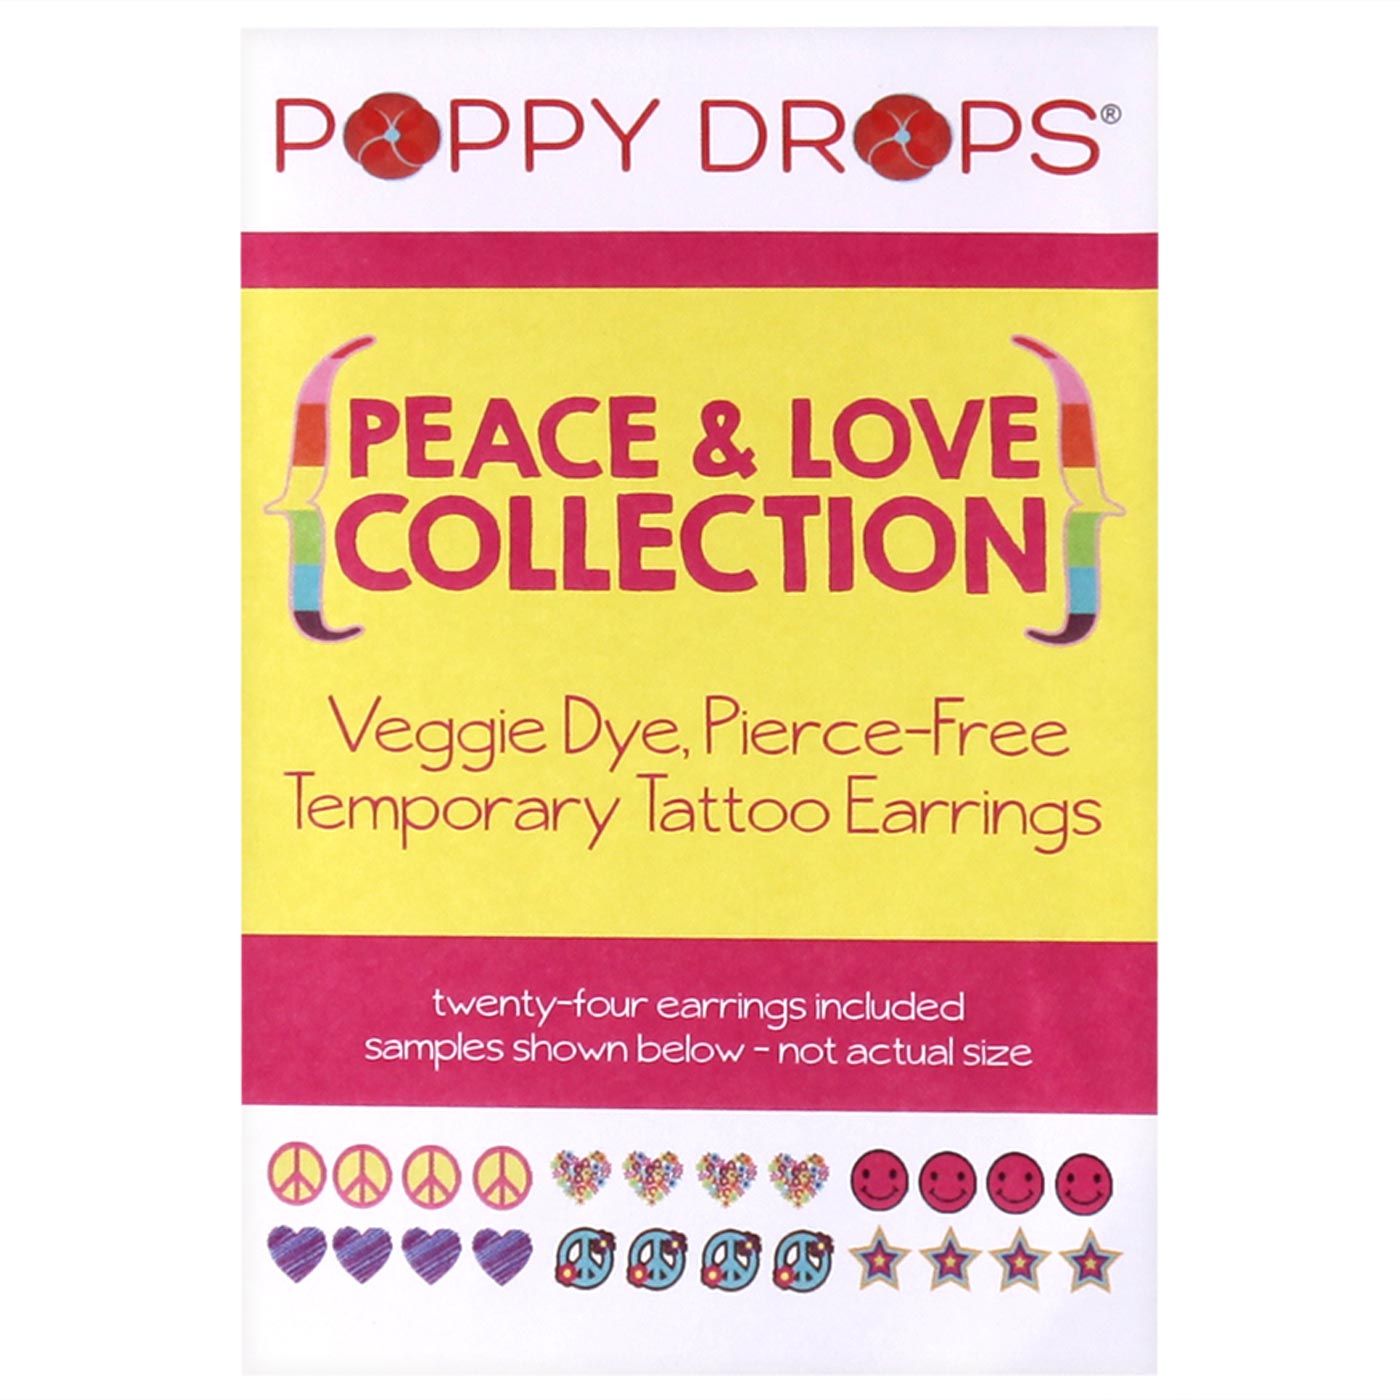 Poppy Drops Pierce-Free Earring Collection Peace & Love - 1